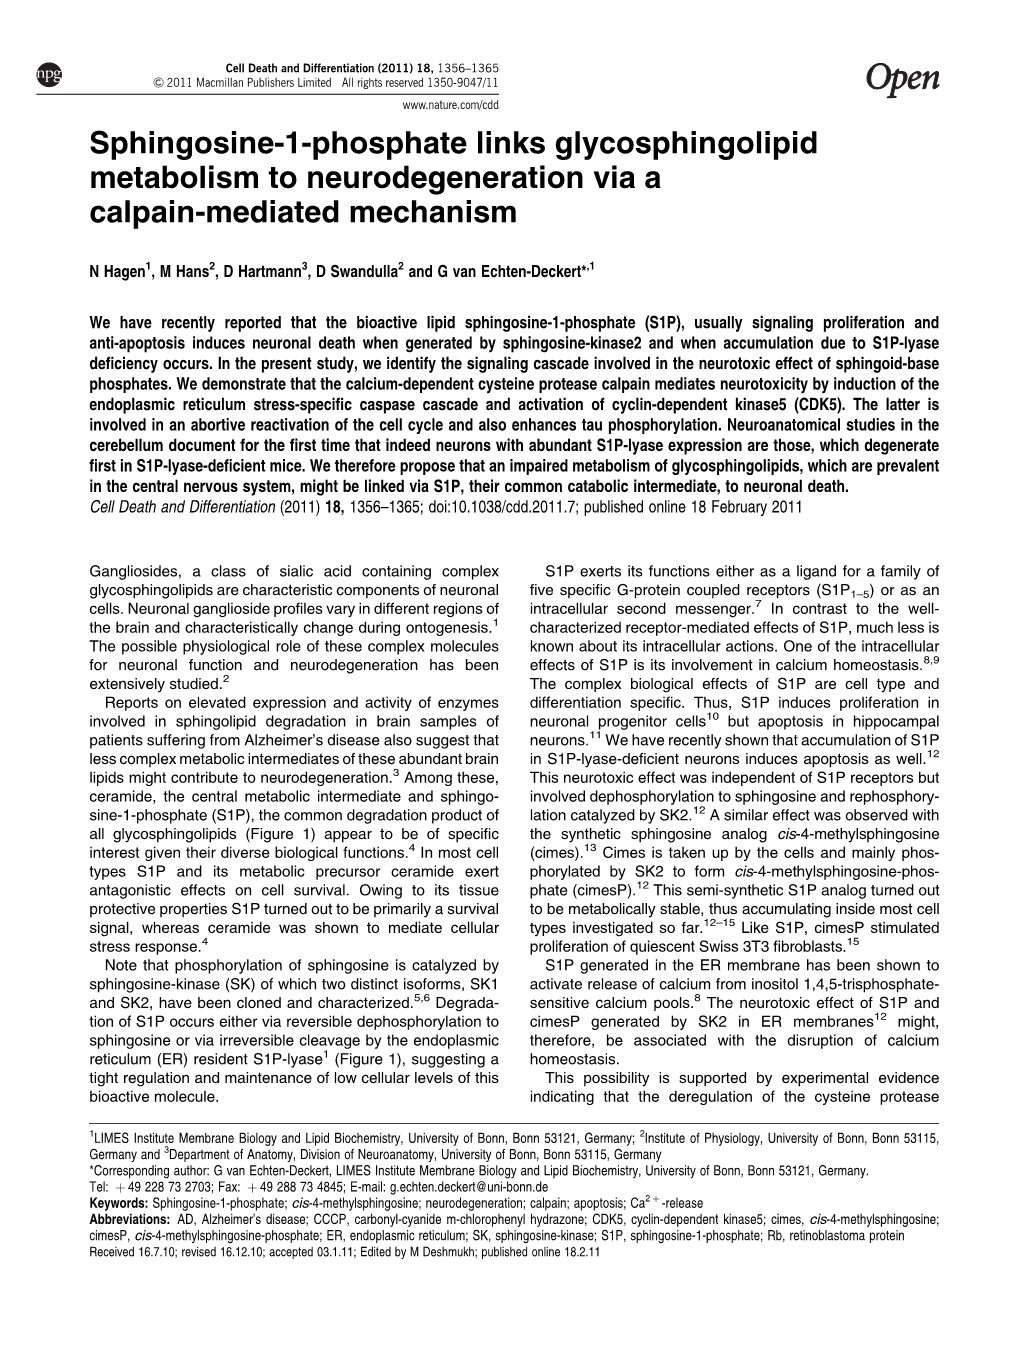 Sphingosine-1-Phosphate Links Glycosphingolipid Metabolism to Neurodegeneration Via a Calpain-Mediated Mechanism